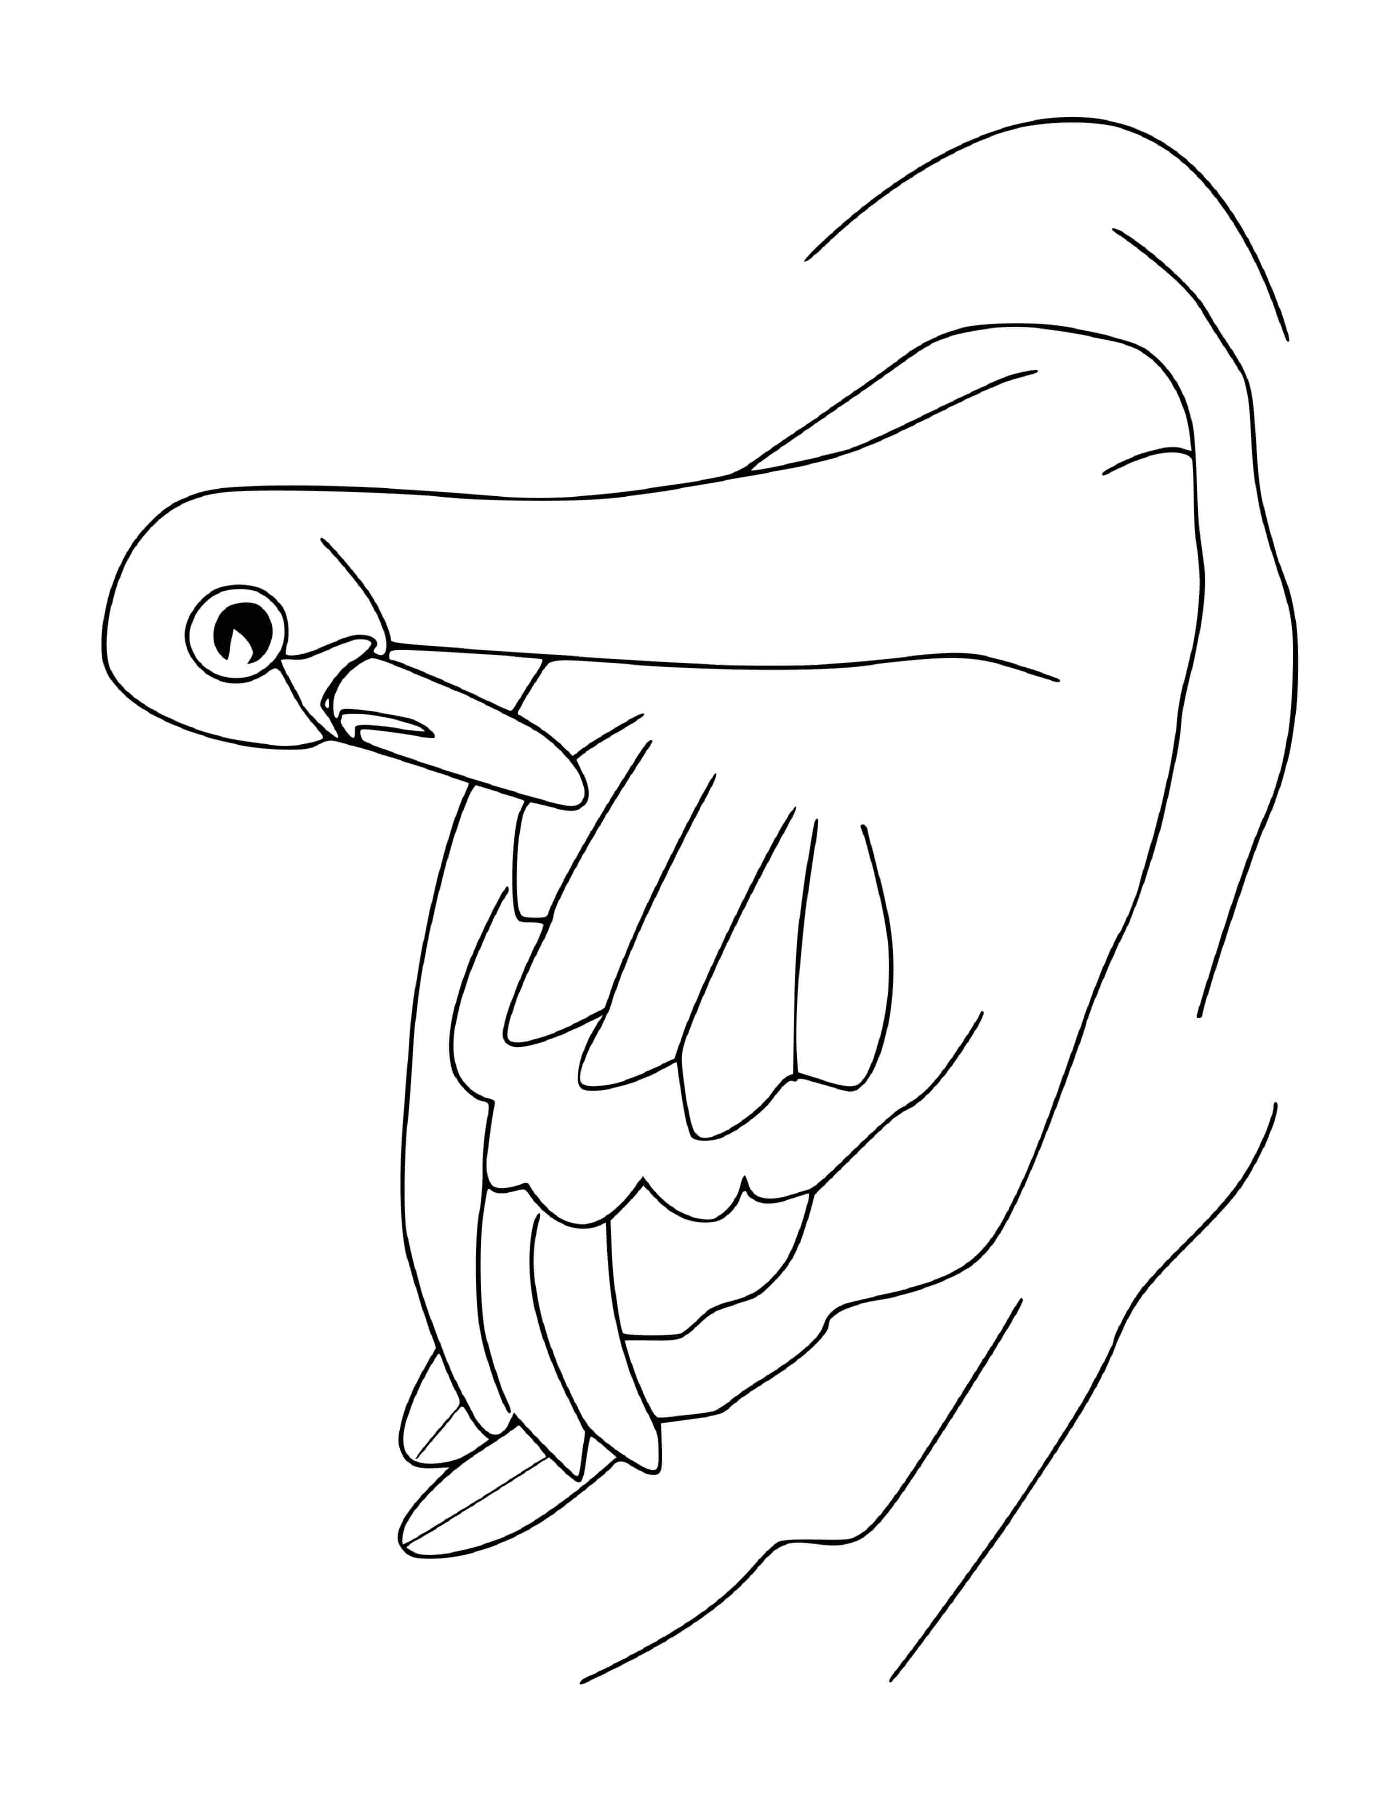  Cisne con alas expandidas 